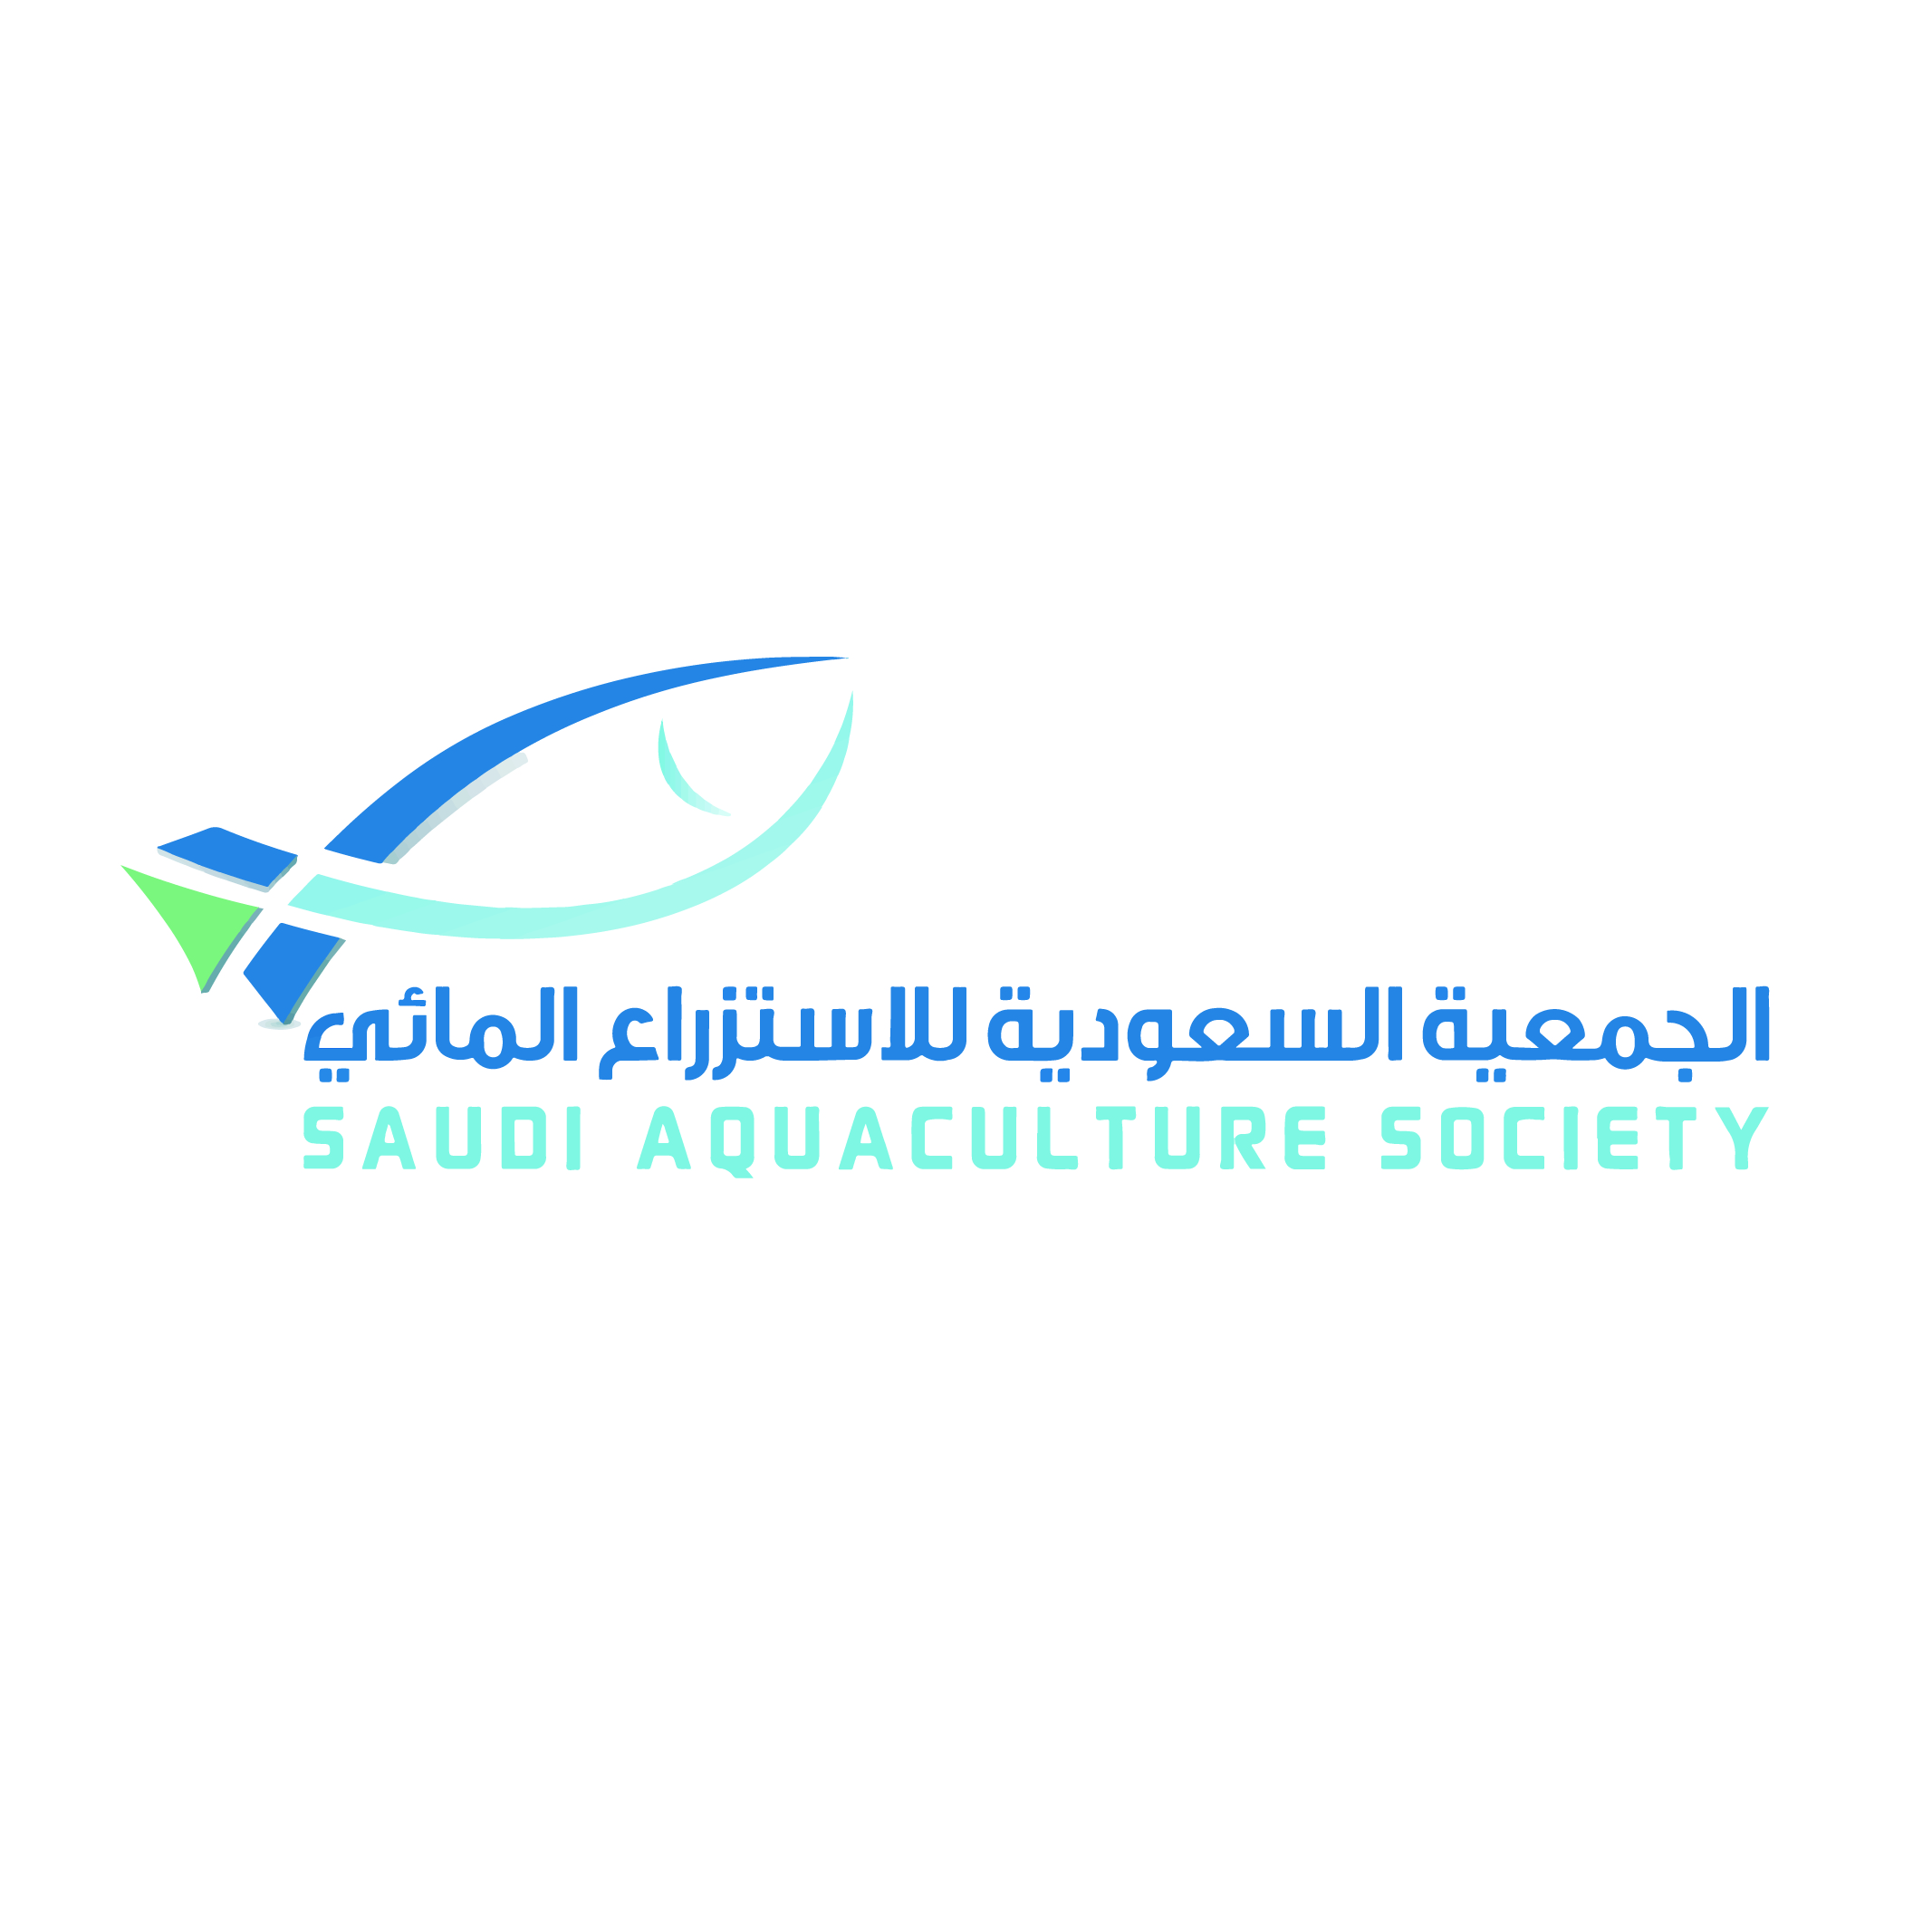 Saudi Aquaculture Society